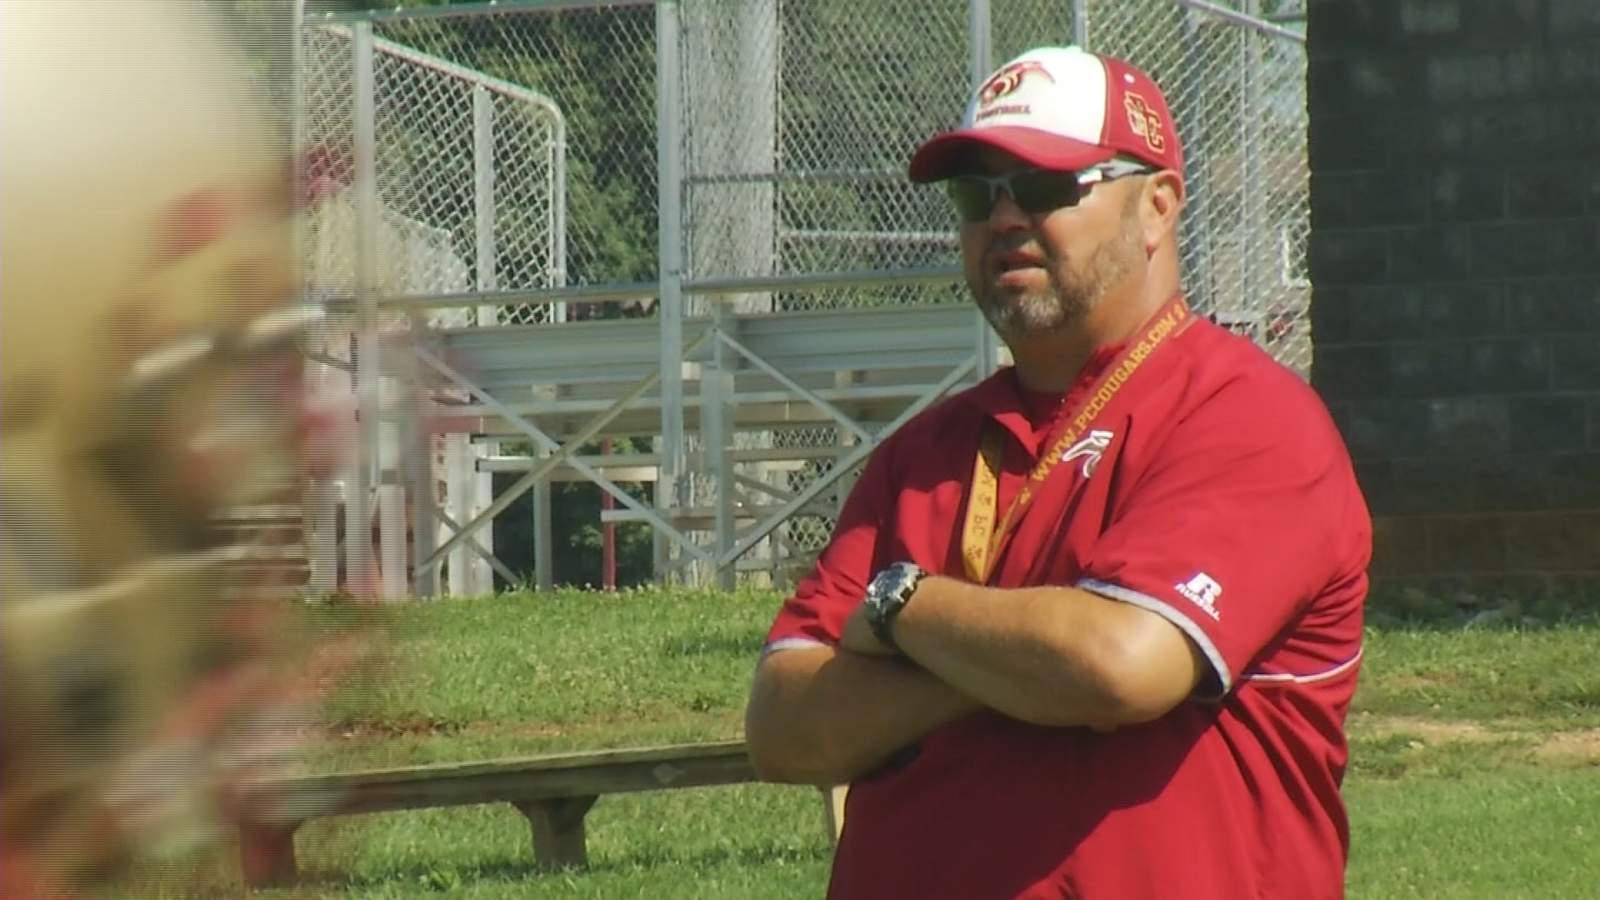 Prep Coaching News: Pulaski Co Football coach resigns, Salem girls get new coach